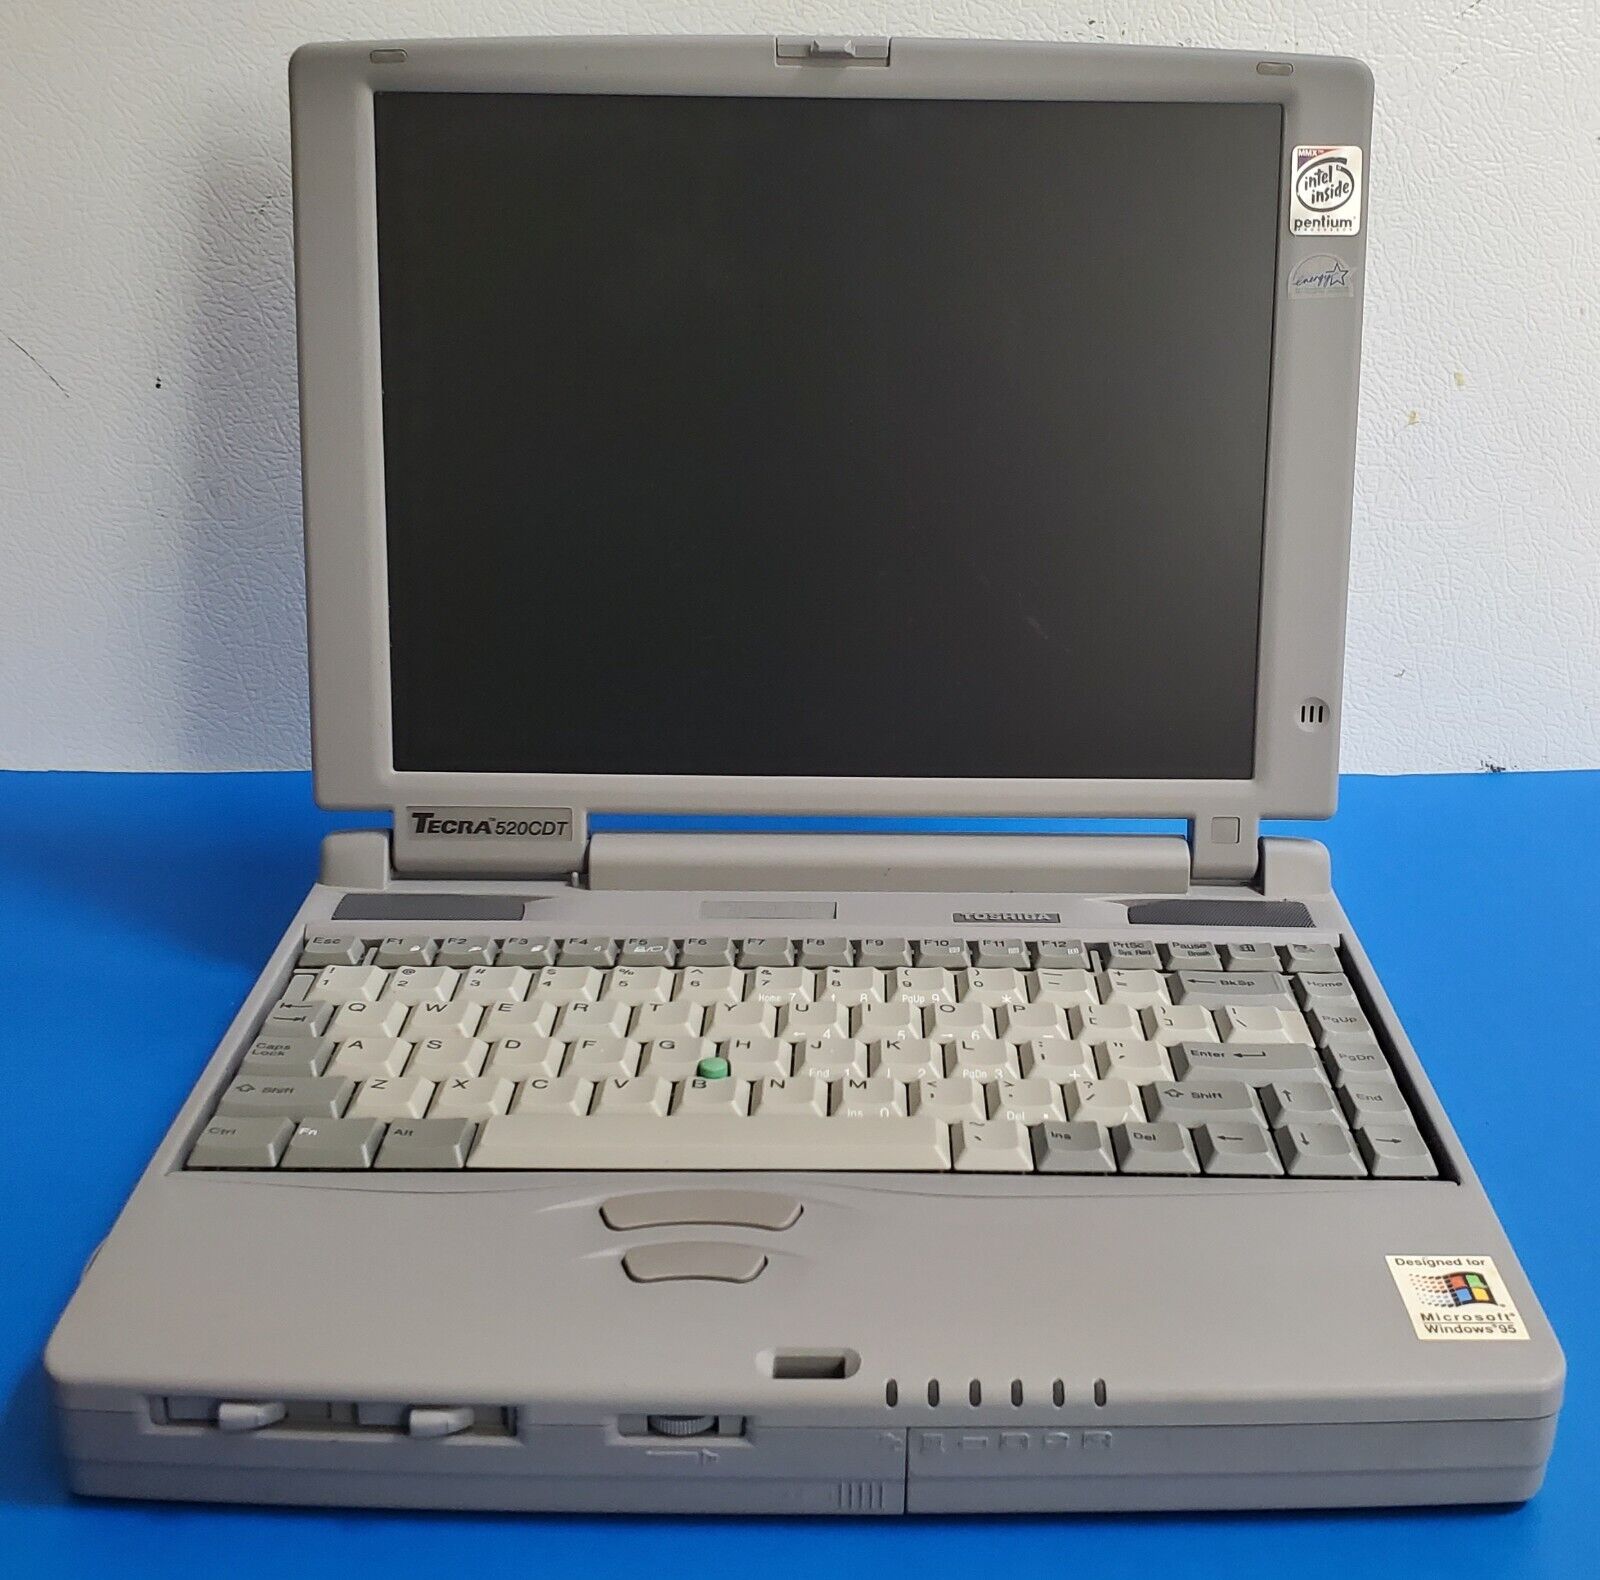 Vintage Toshiba Tecra 520CDT Pentium Laptop Computer Retro as is For Parts